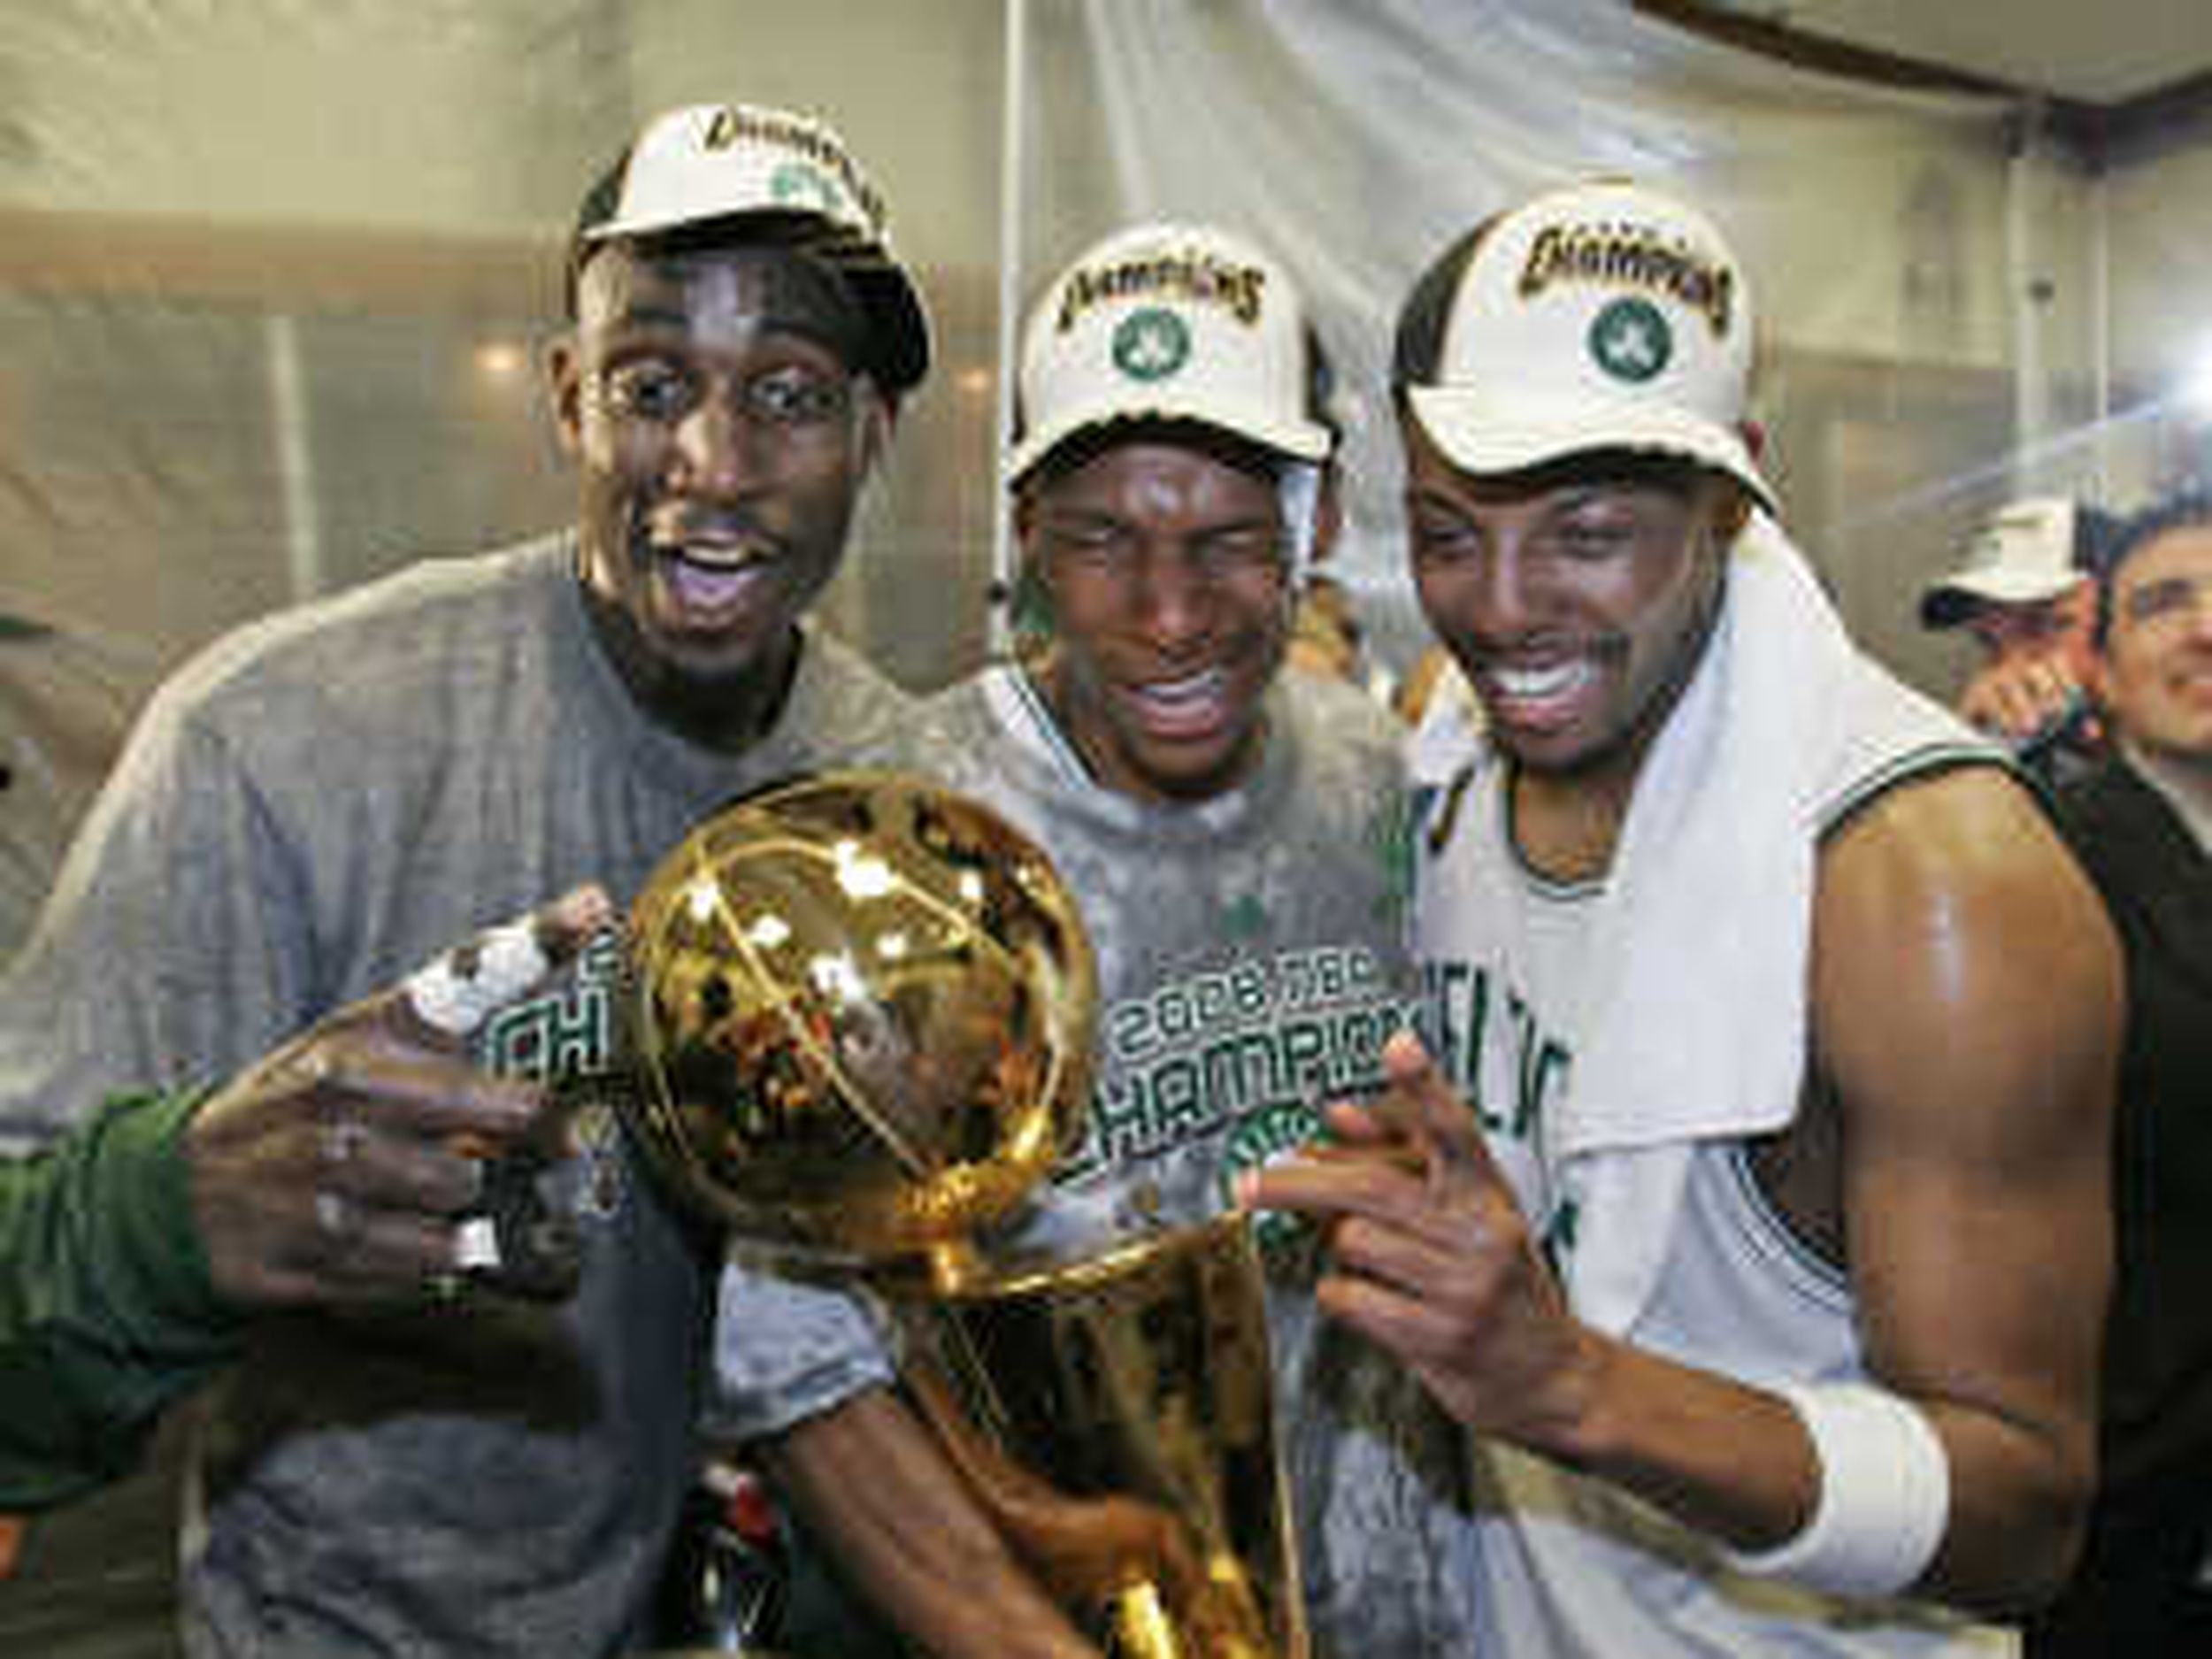 Paul Pierce Boston Celtics Unsigned 2008 NBA Finals MVP Trophy Celebration  Photograph